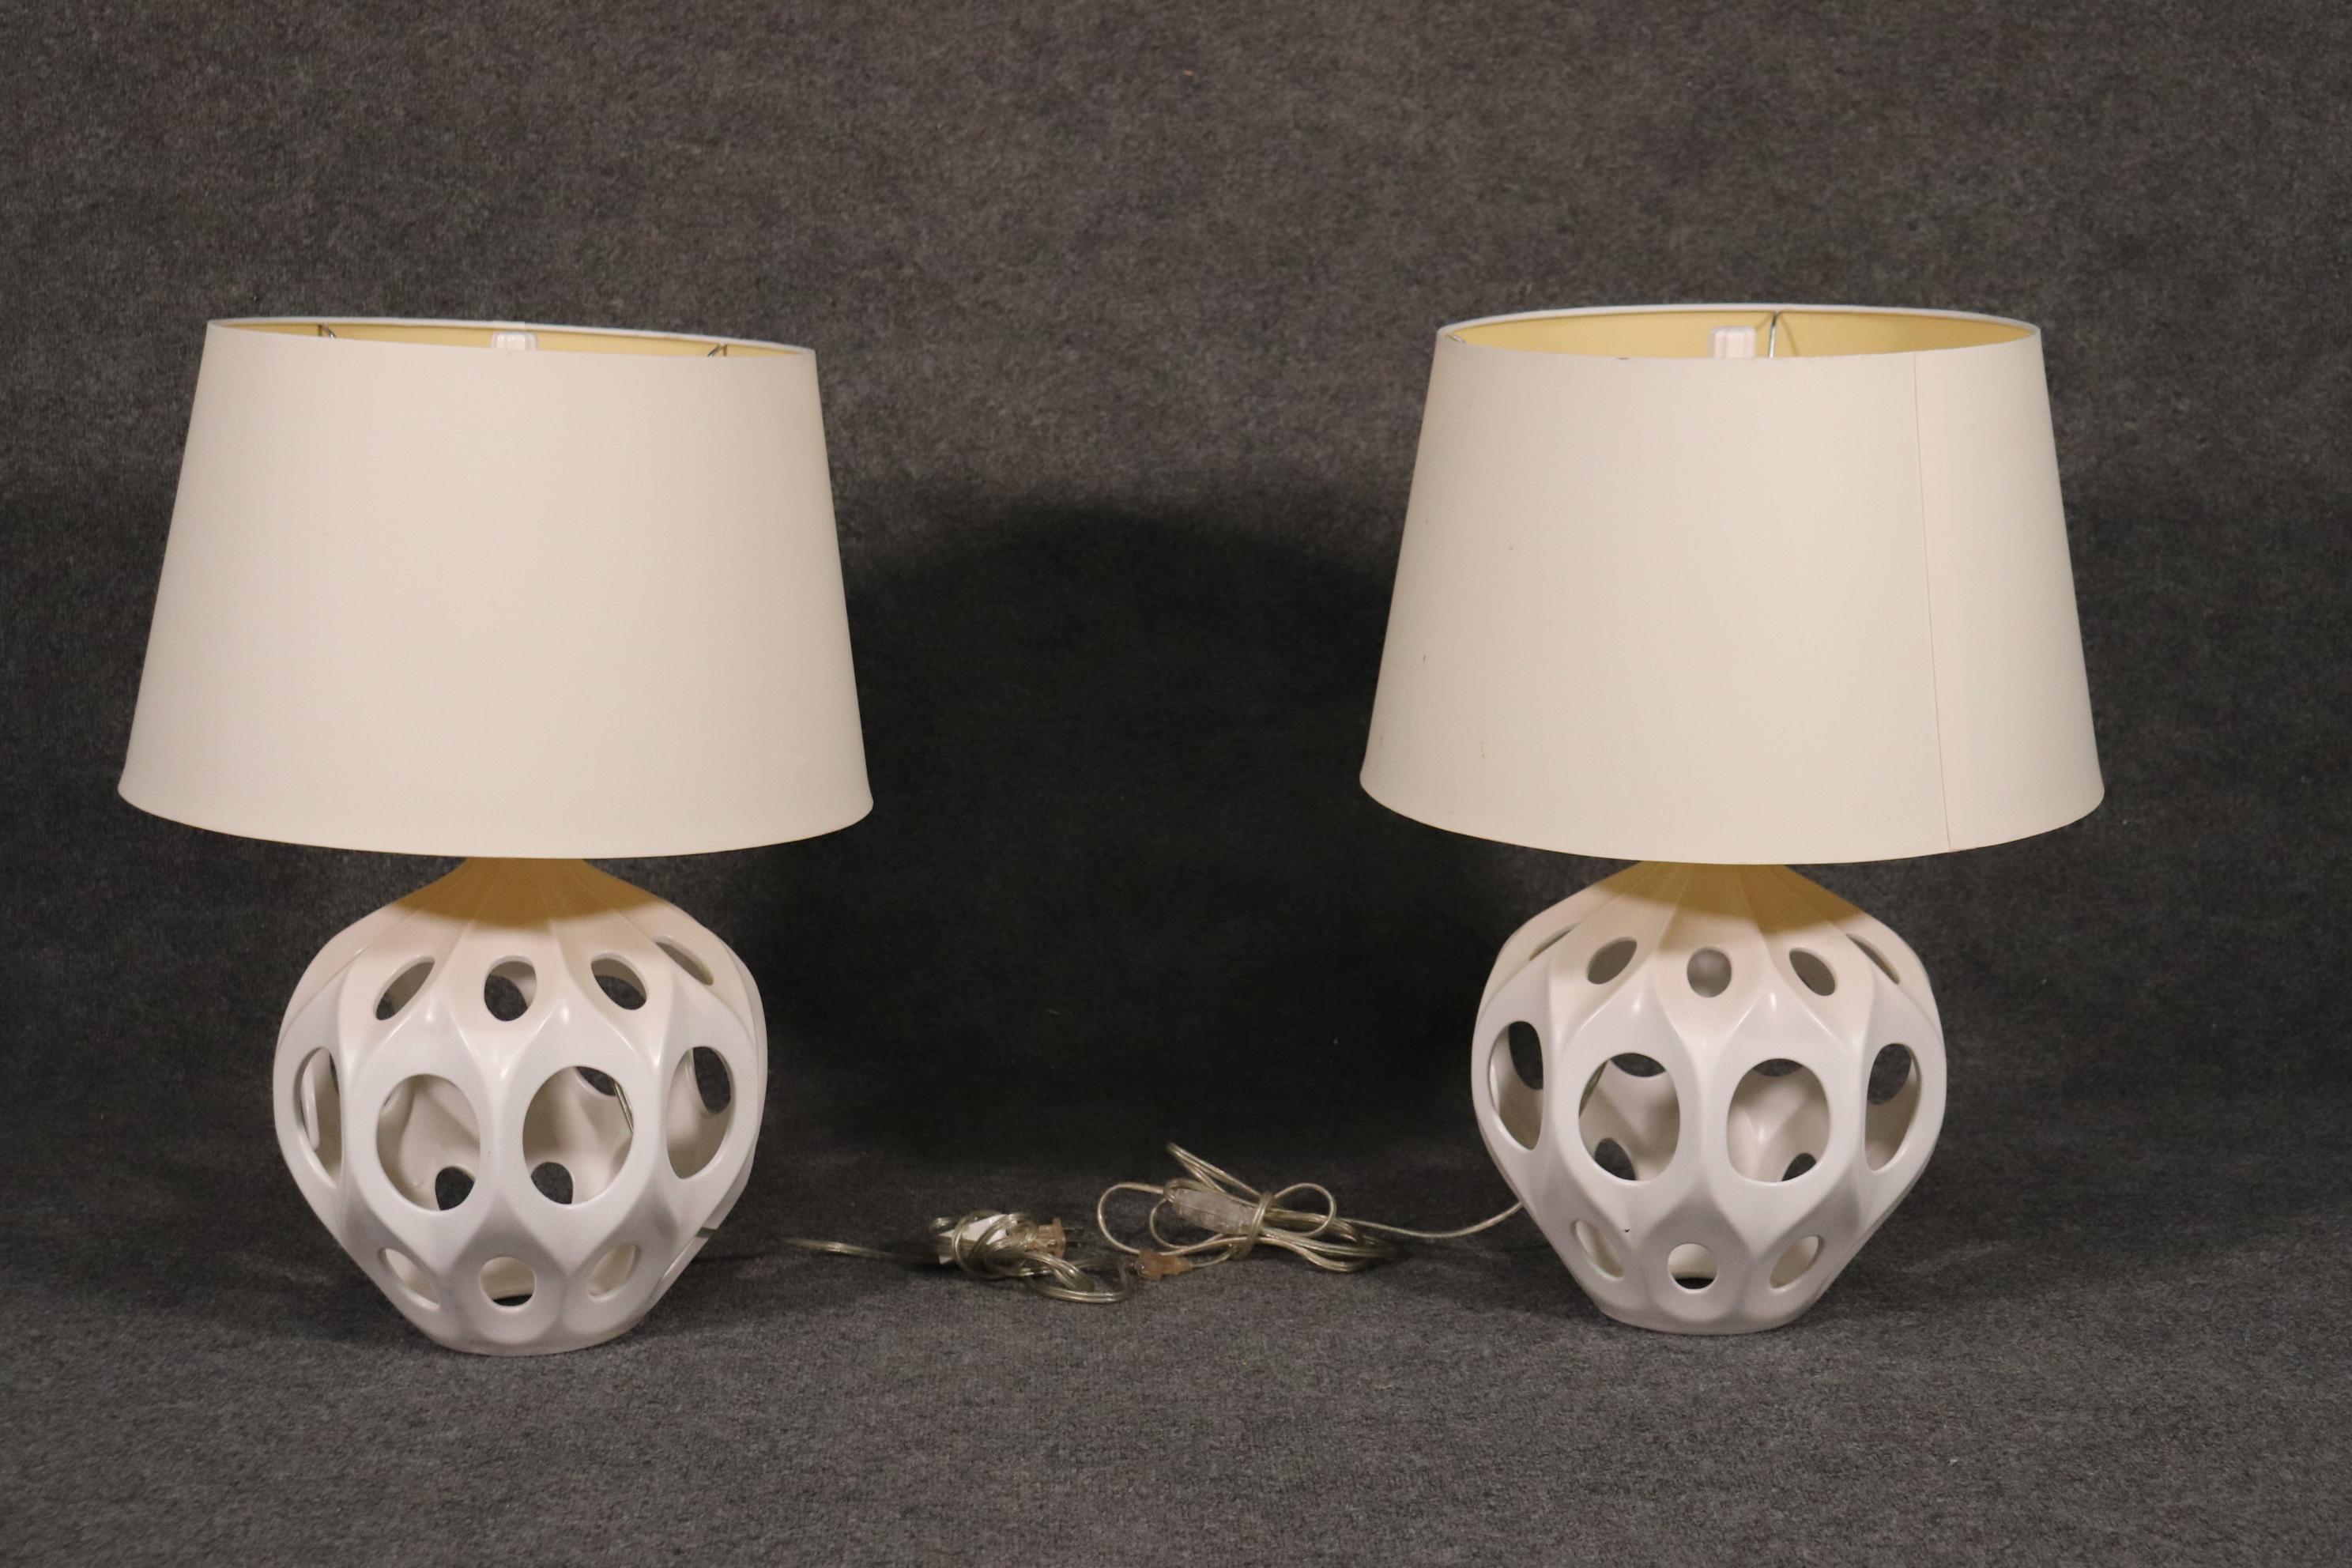 Pair of Decorative Ceramic Mid-Century Modern Geometric Table Lamps 1